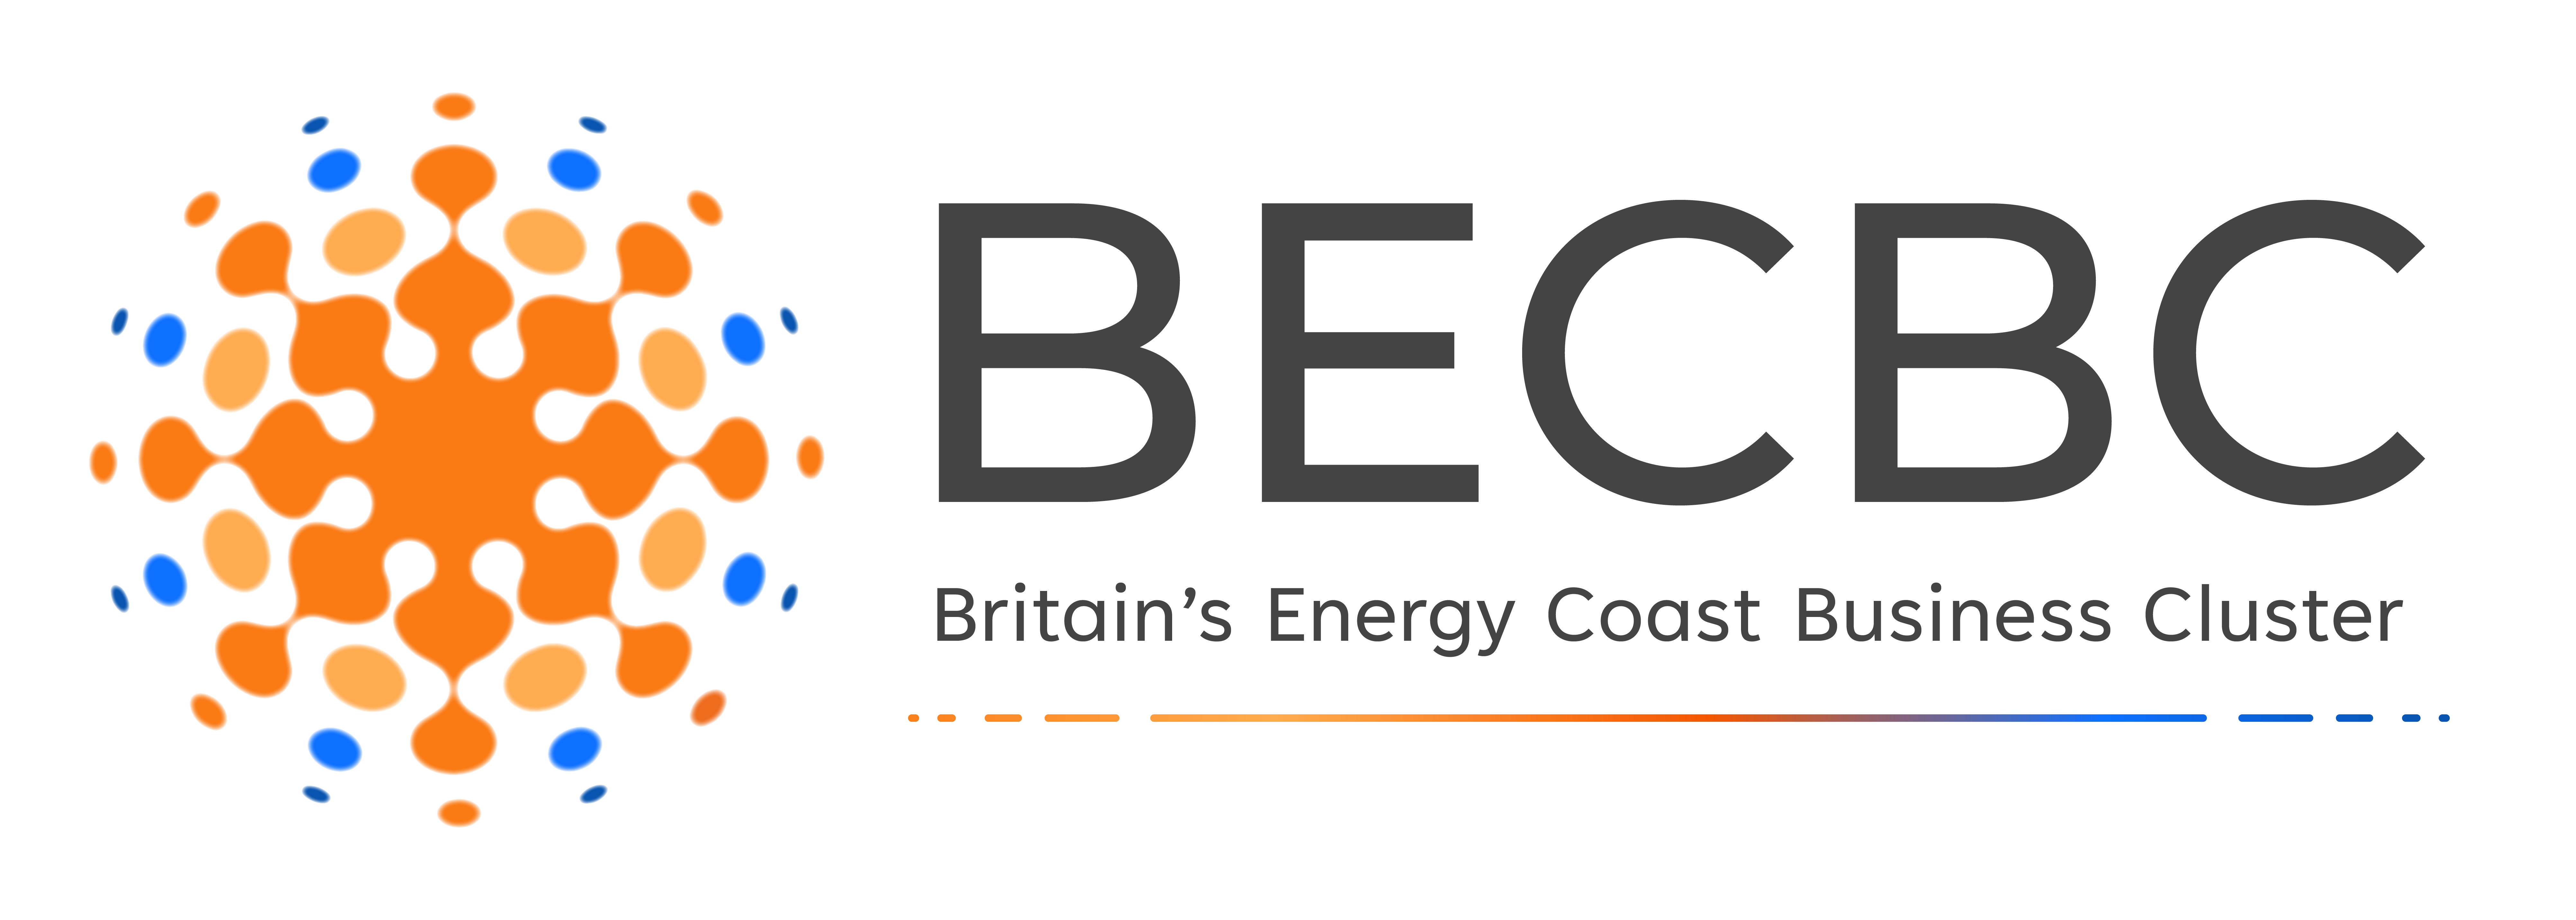 Britain's Energy Coast Business Cluster (BECBC) Logo